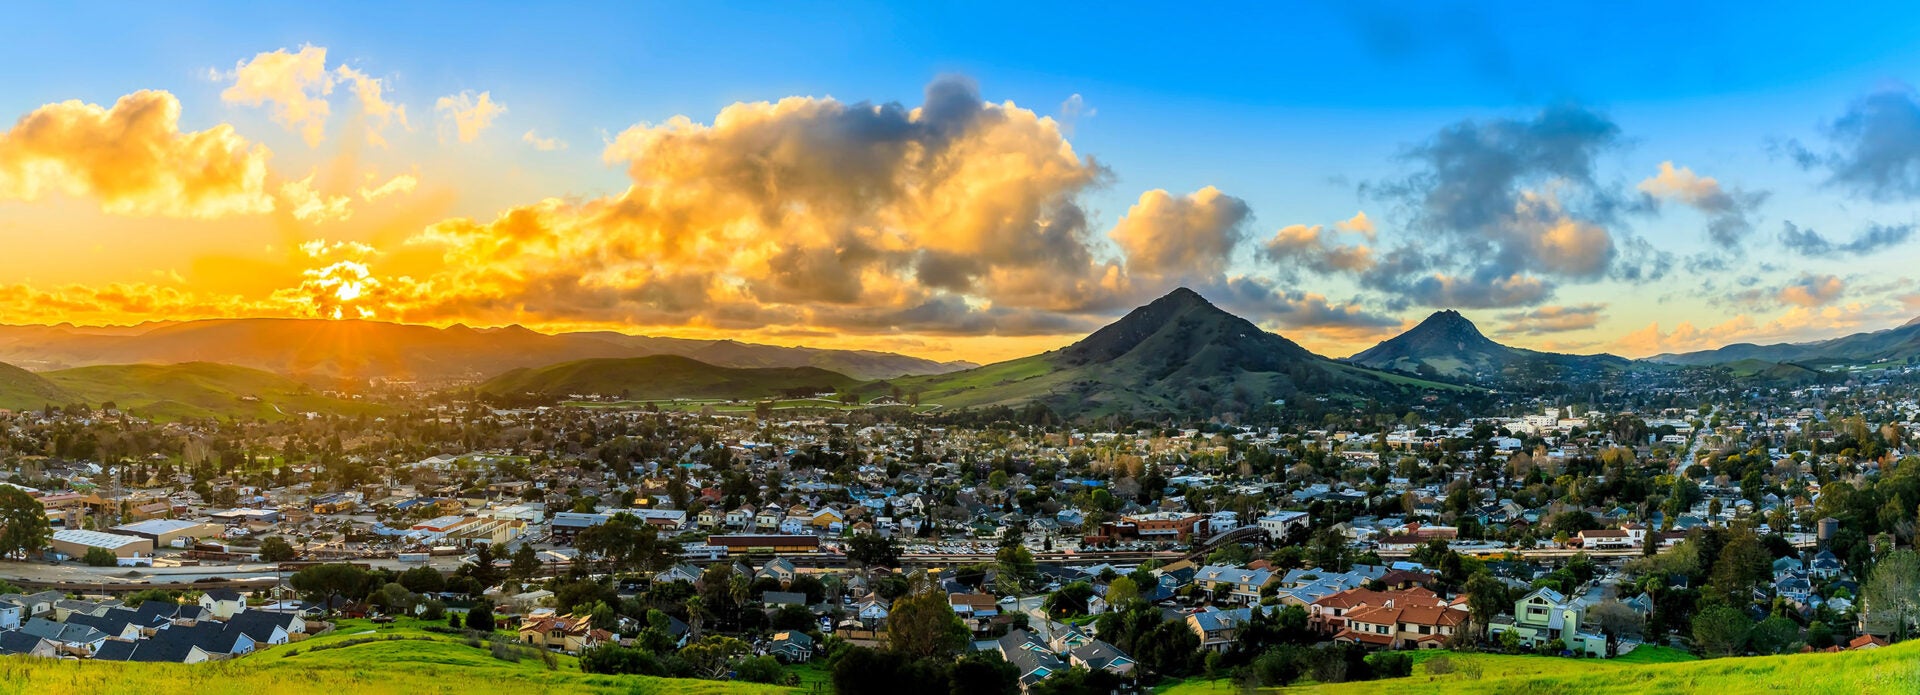 Panorama from Terrace Hill, San Luis Obispo, CA